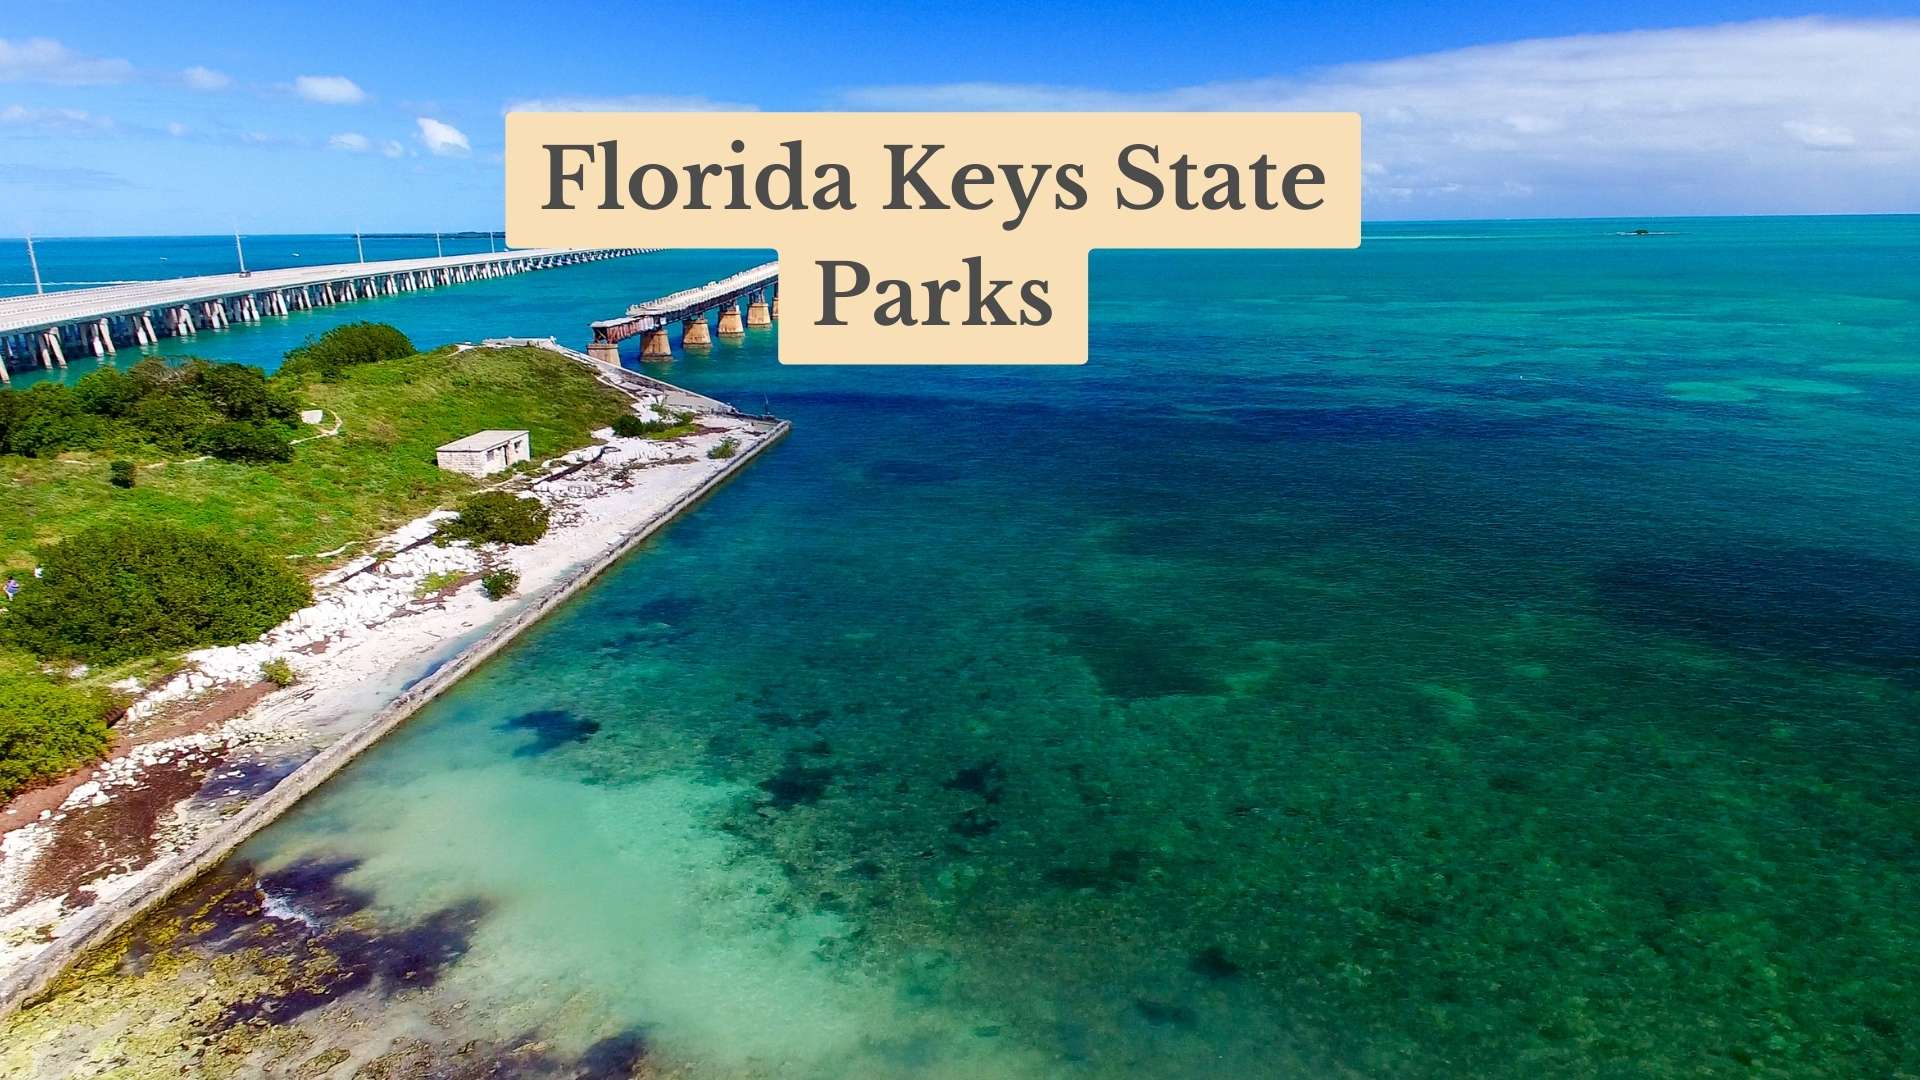 Explore Top 9 Florida Keys State Parks: Bahia Honda & More